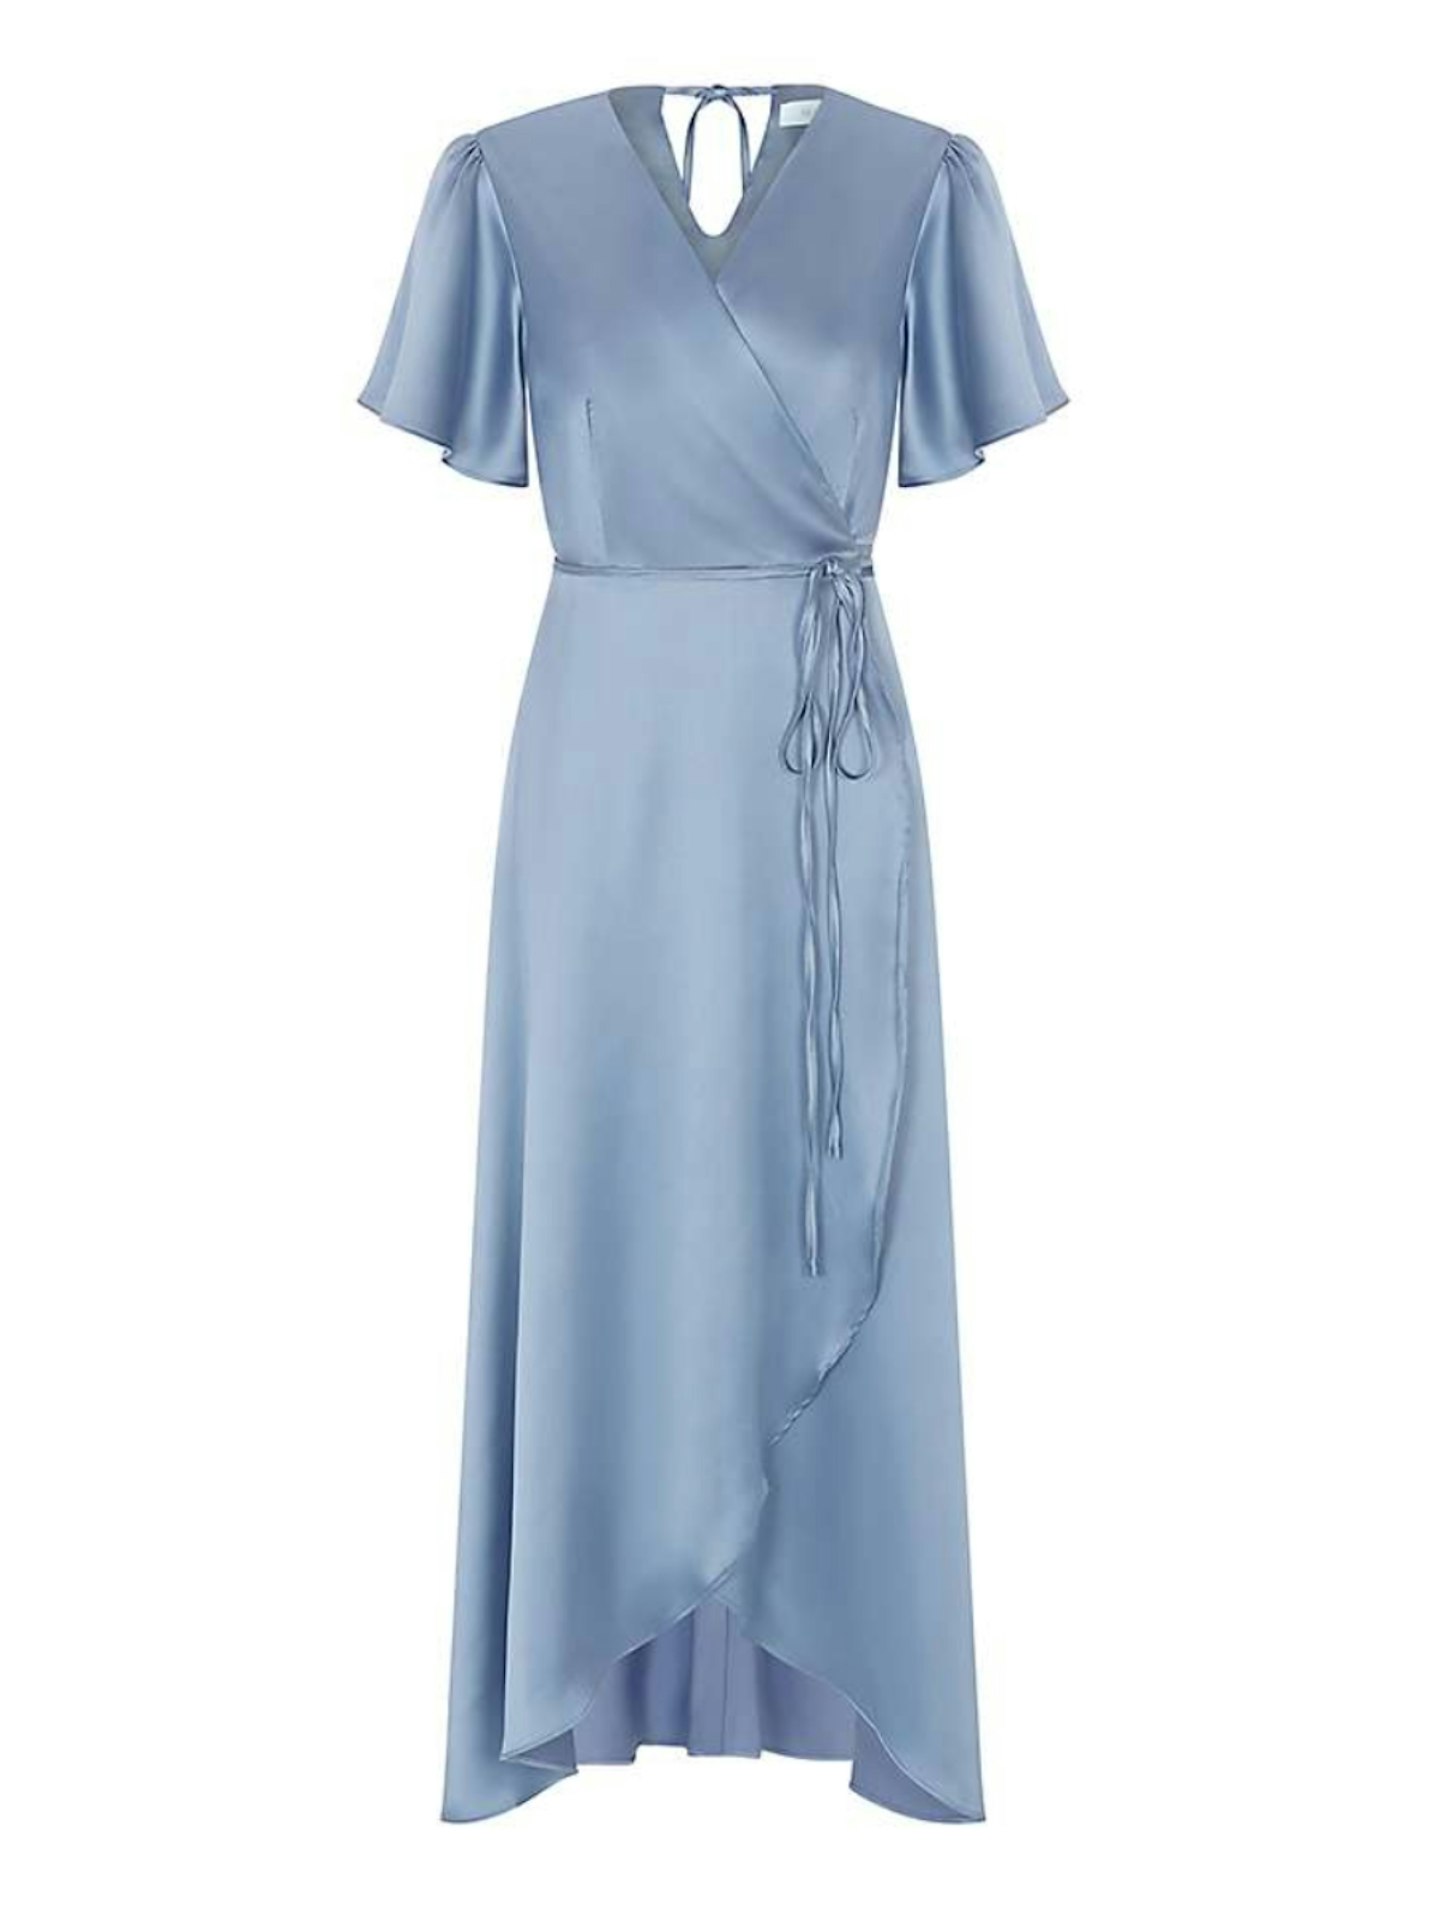 John Lewis Rewritten Florence Waterfall Hem Satin Wrap Dress, Sky Blue